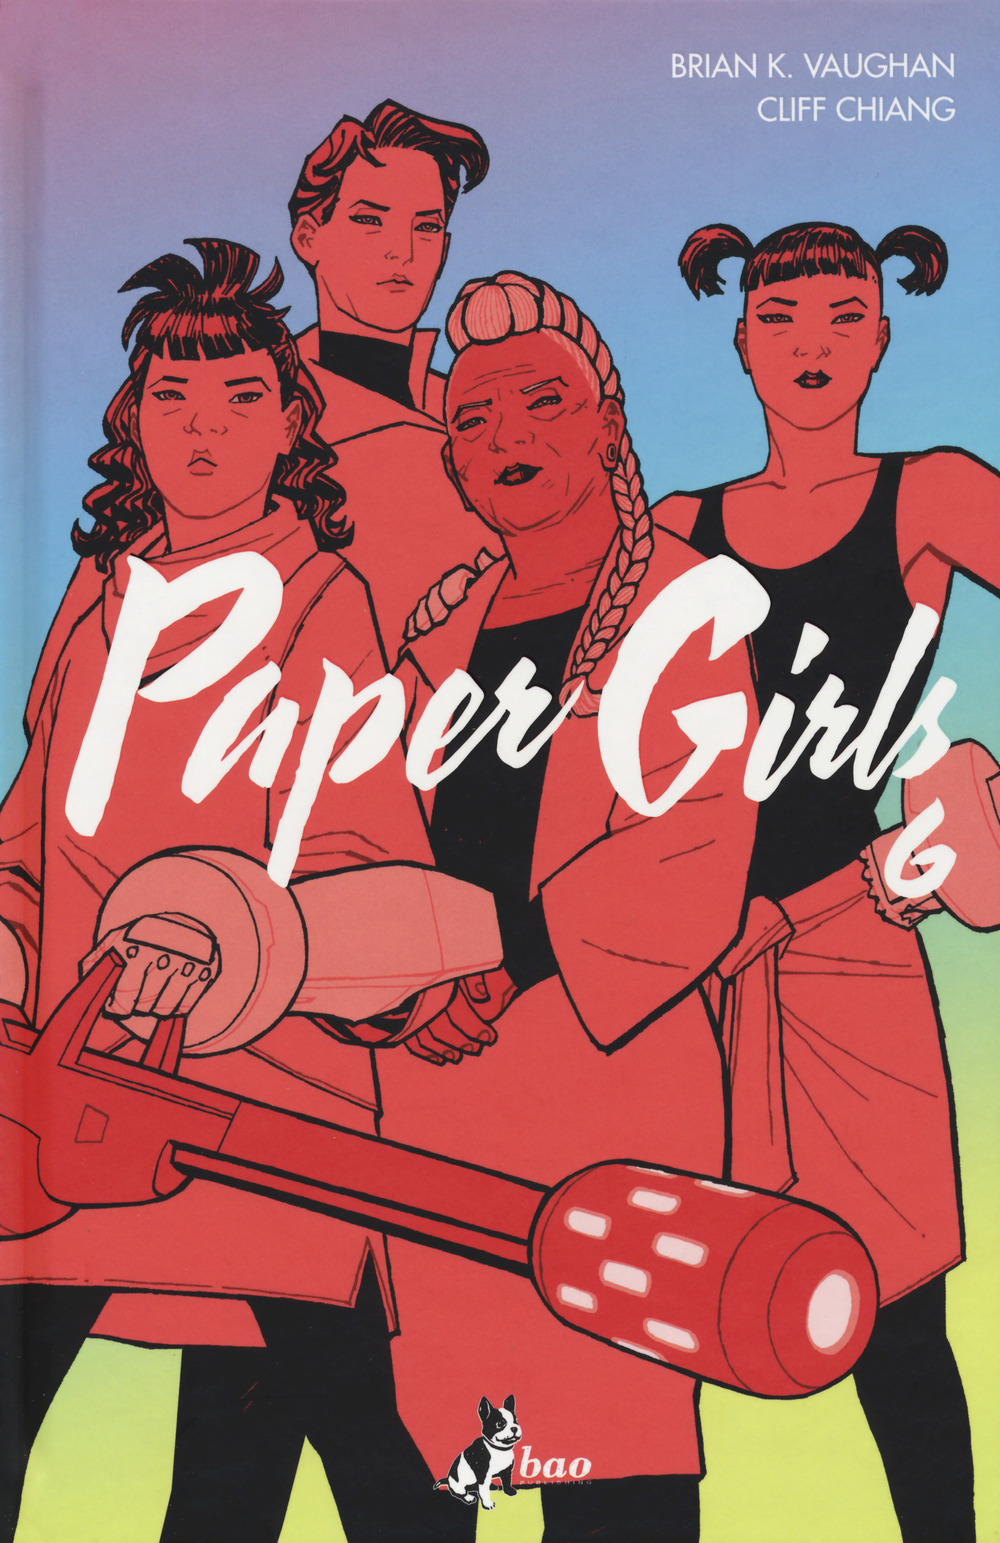 Brian K. Vaughan / Cliff Chiang - Paper Girls #06